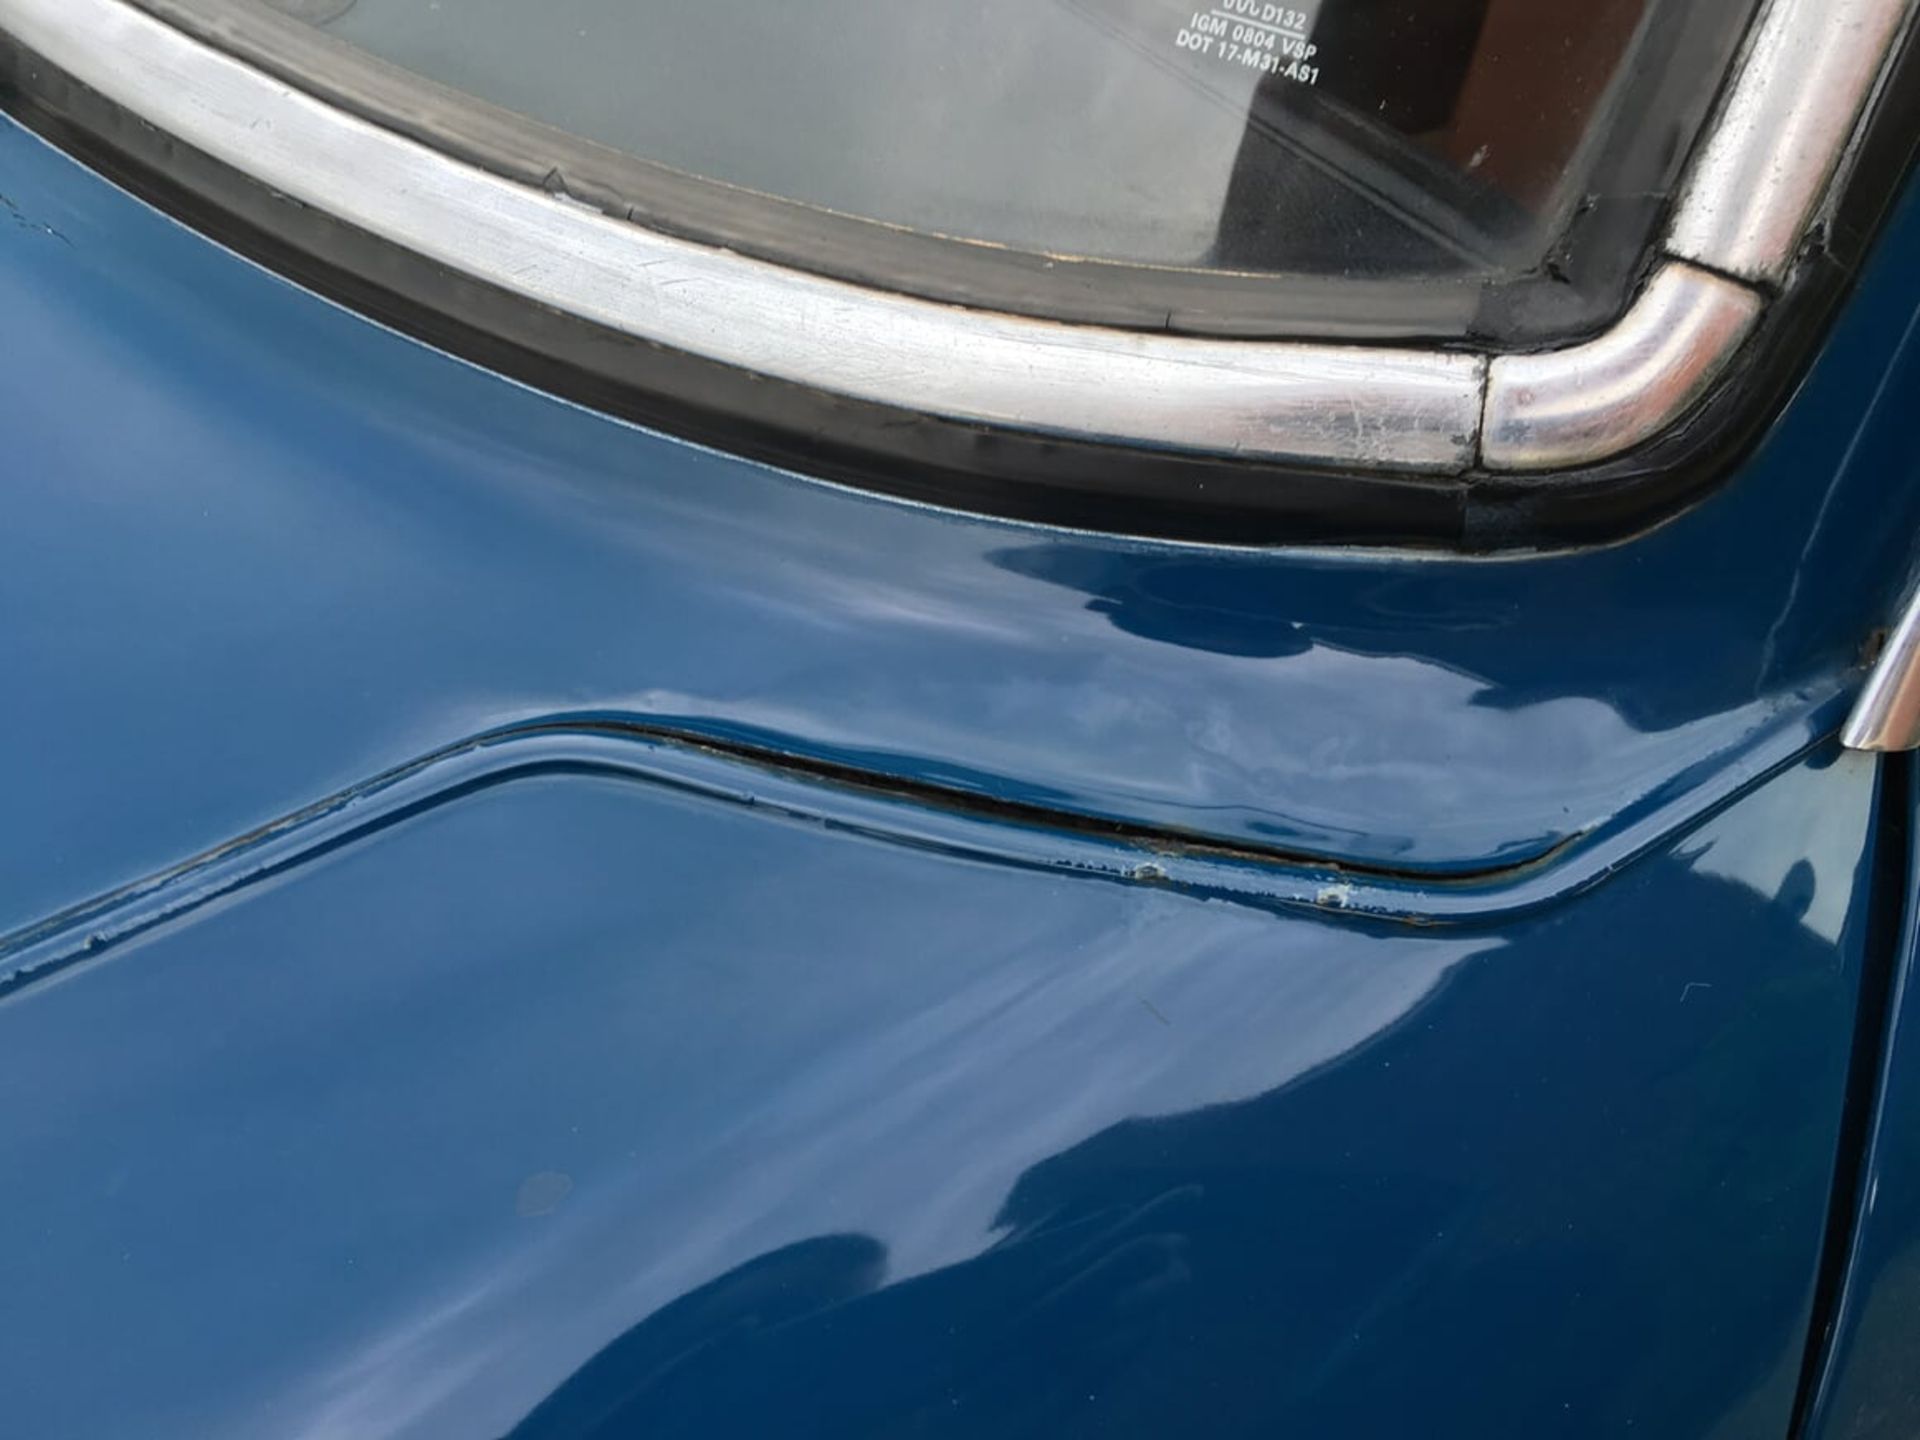 1971 MGB GT Chrome Bumper Teal Blue Overdrive - Image 27 of 30